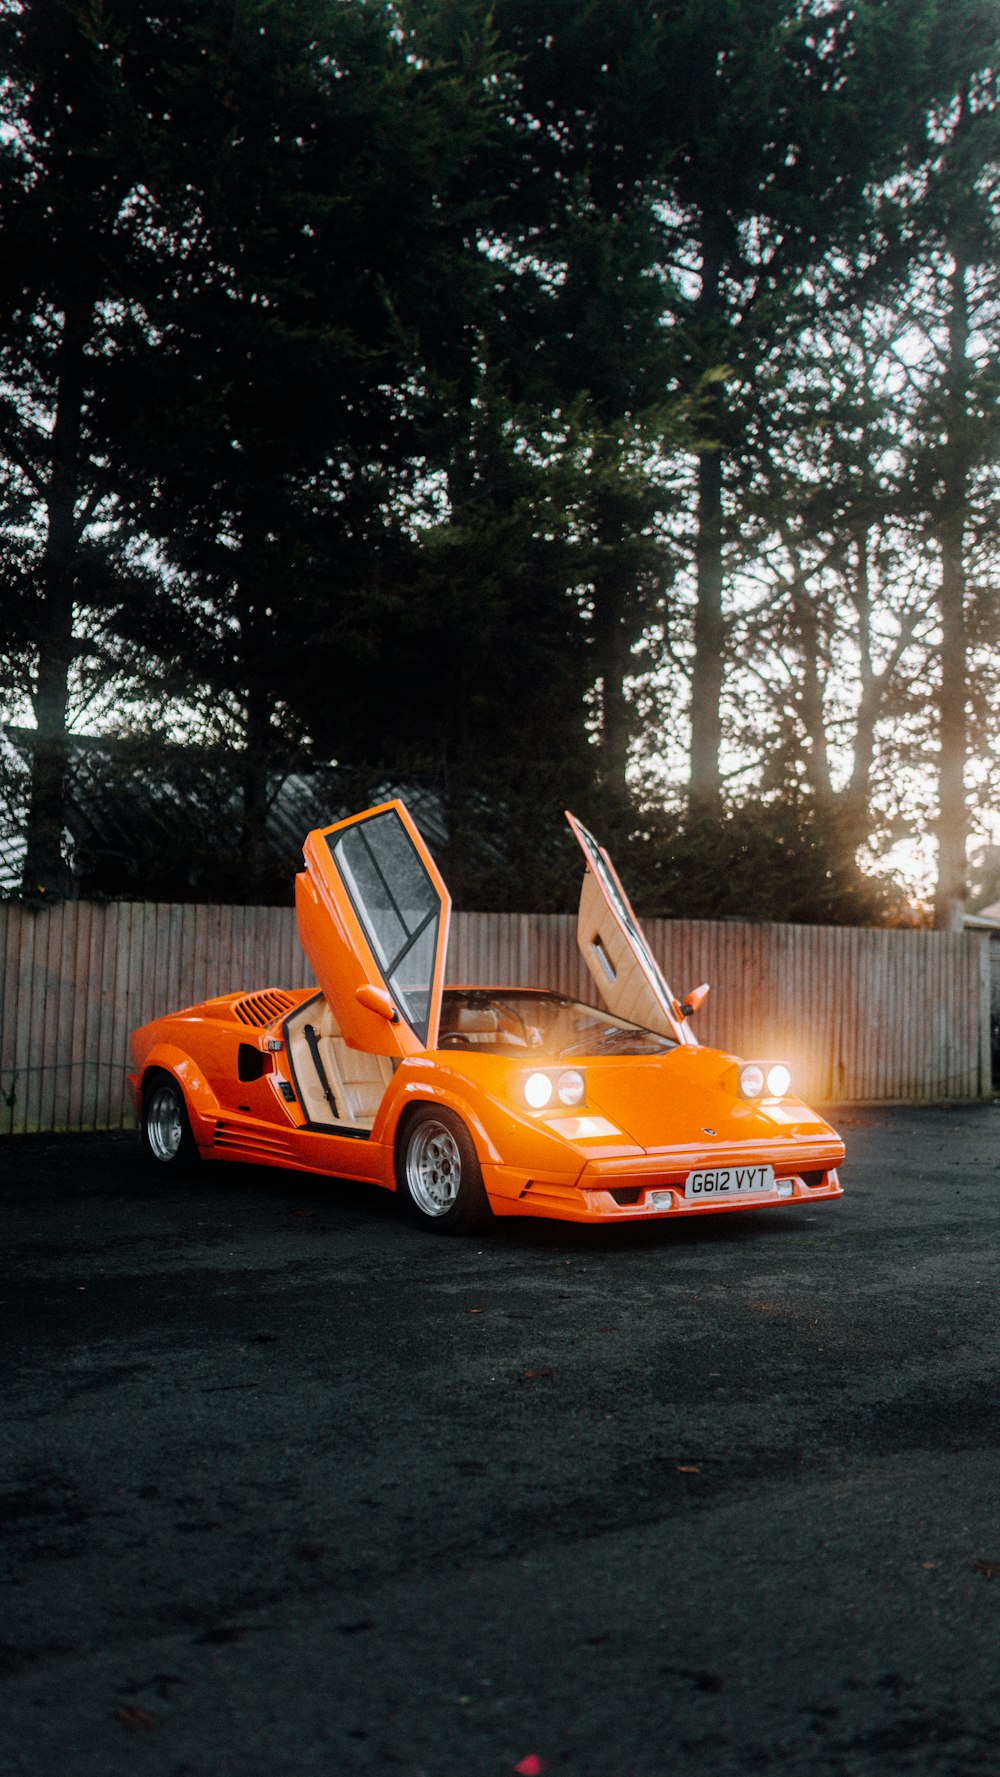 an orange car with a spoiler